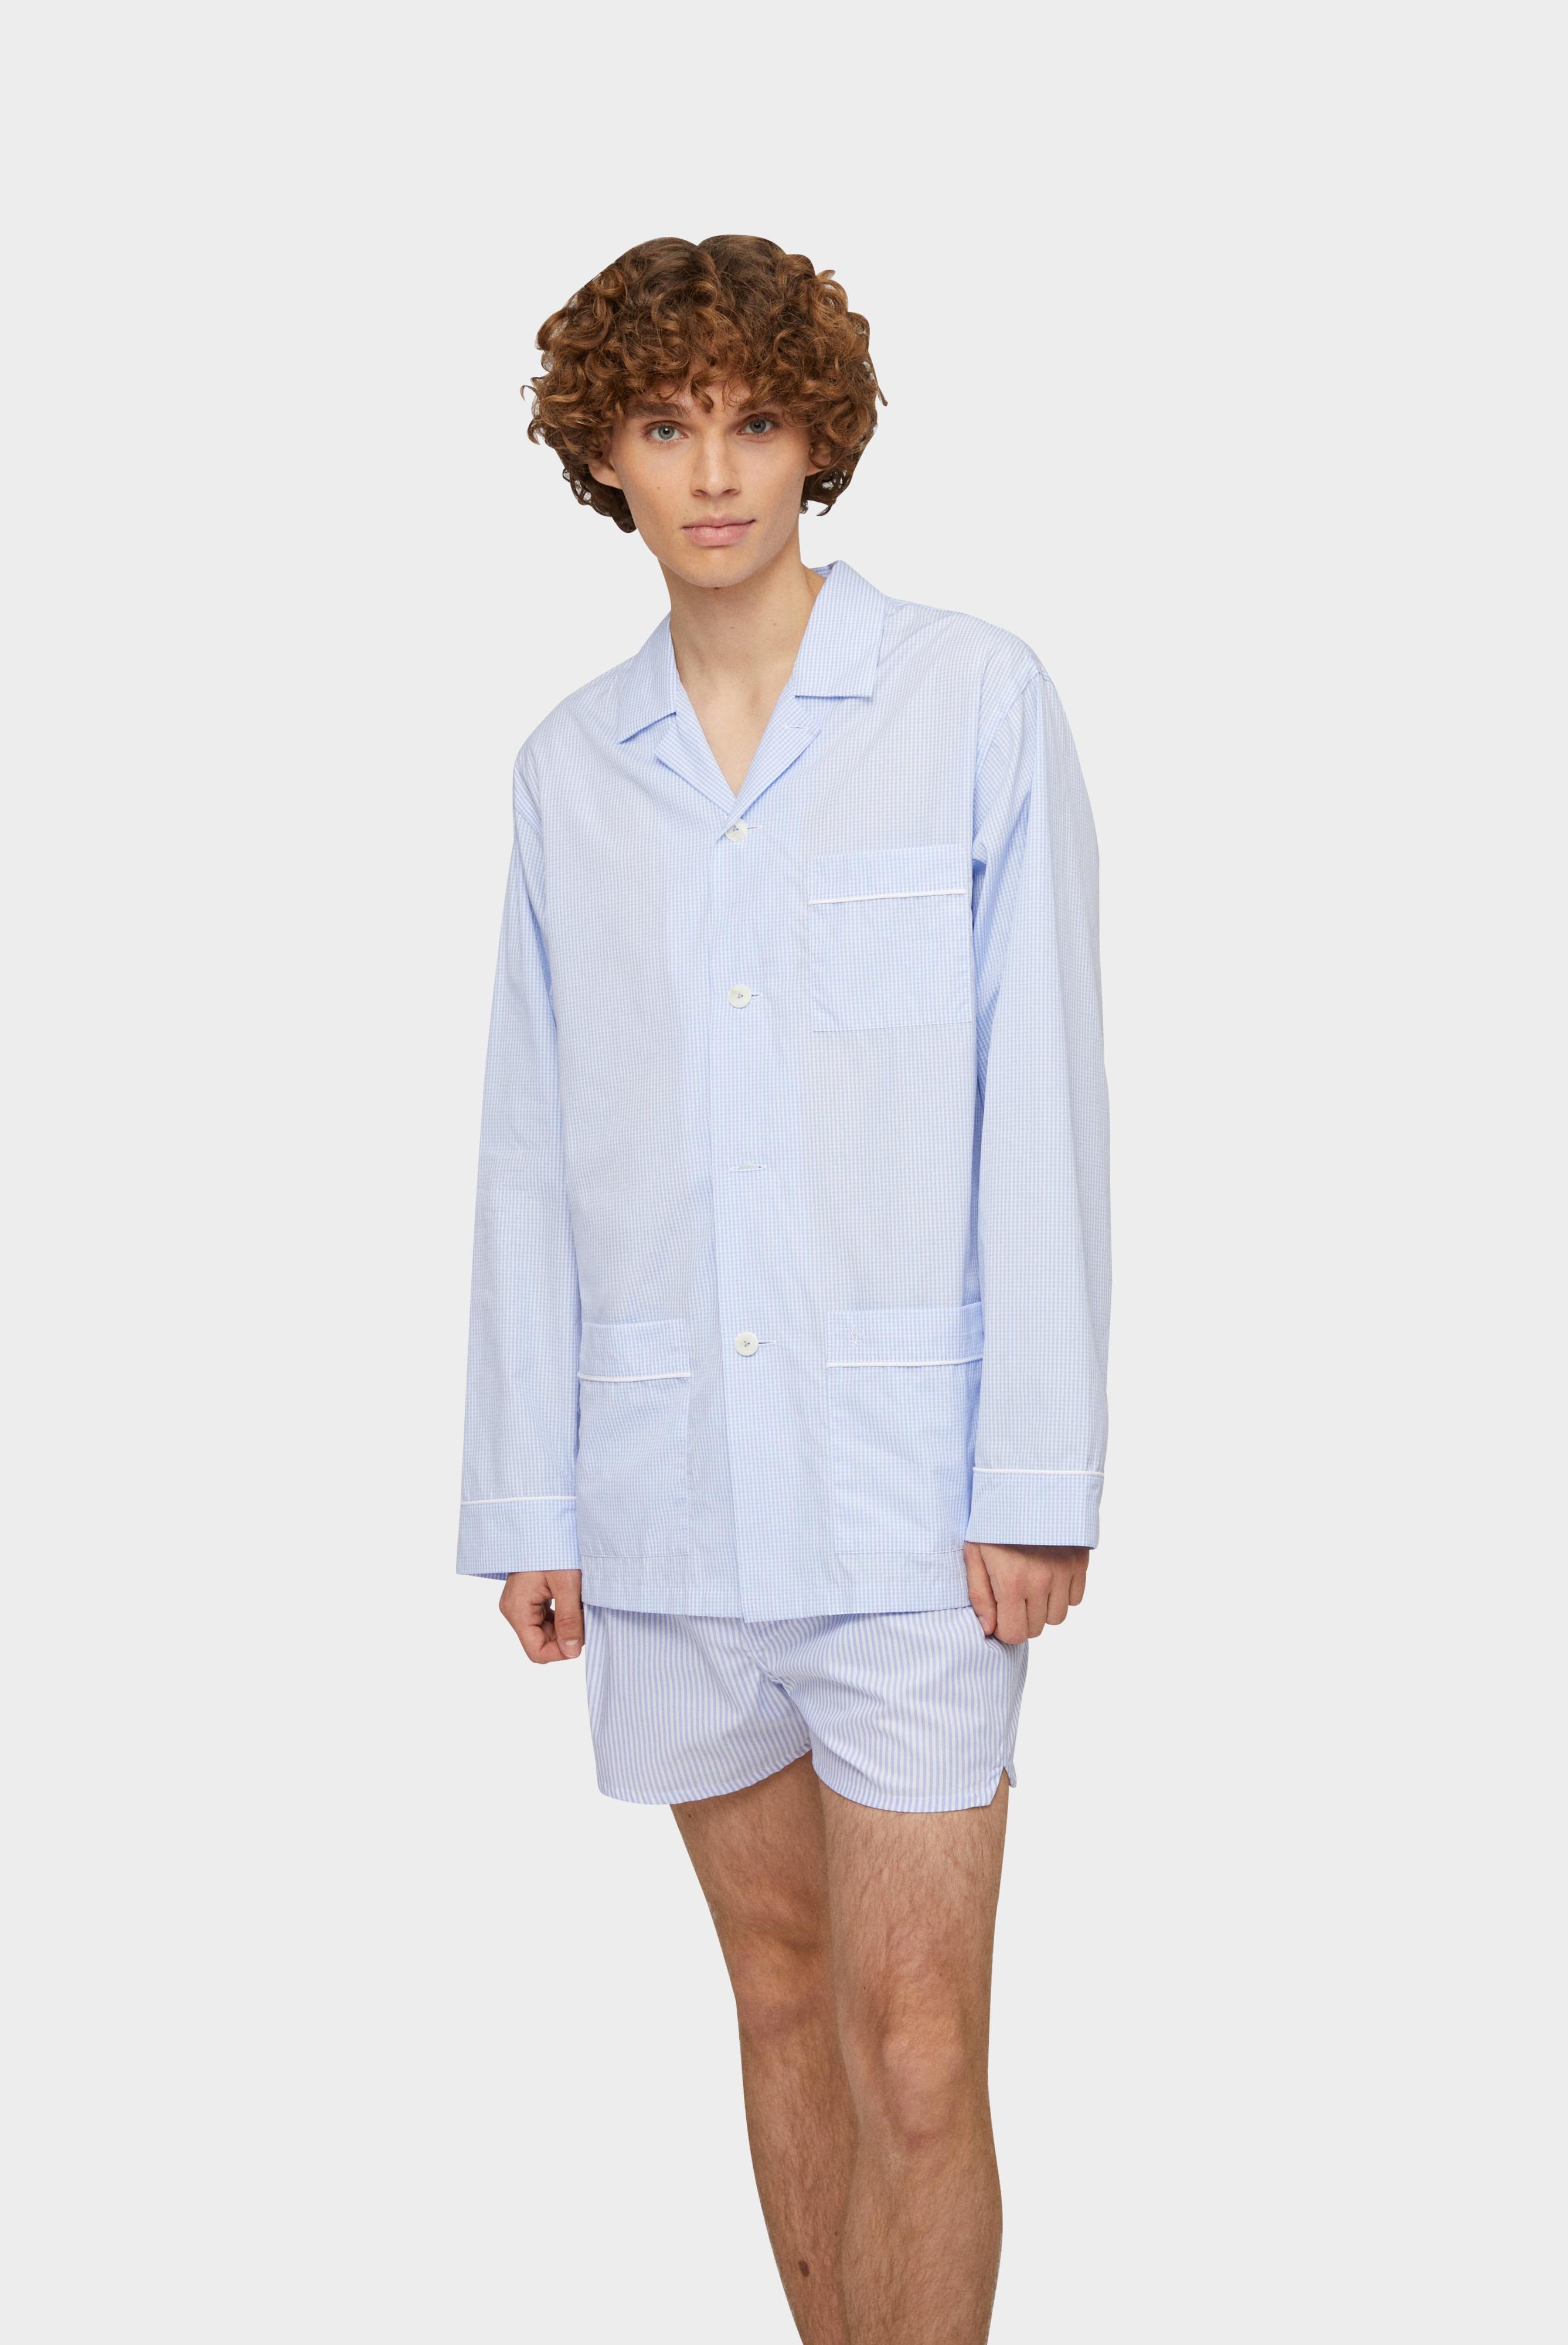 Pyjamas+Schlafanzug aus Popeline Gestreift+91.1139.UK.141787.720.46